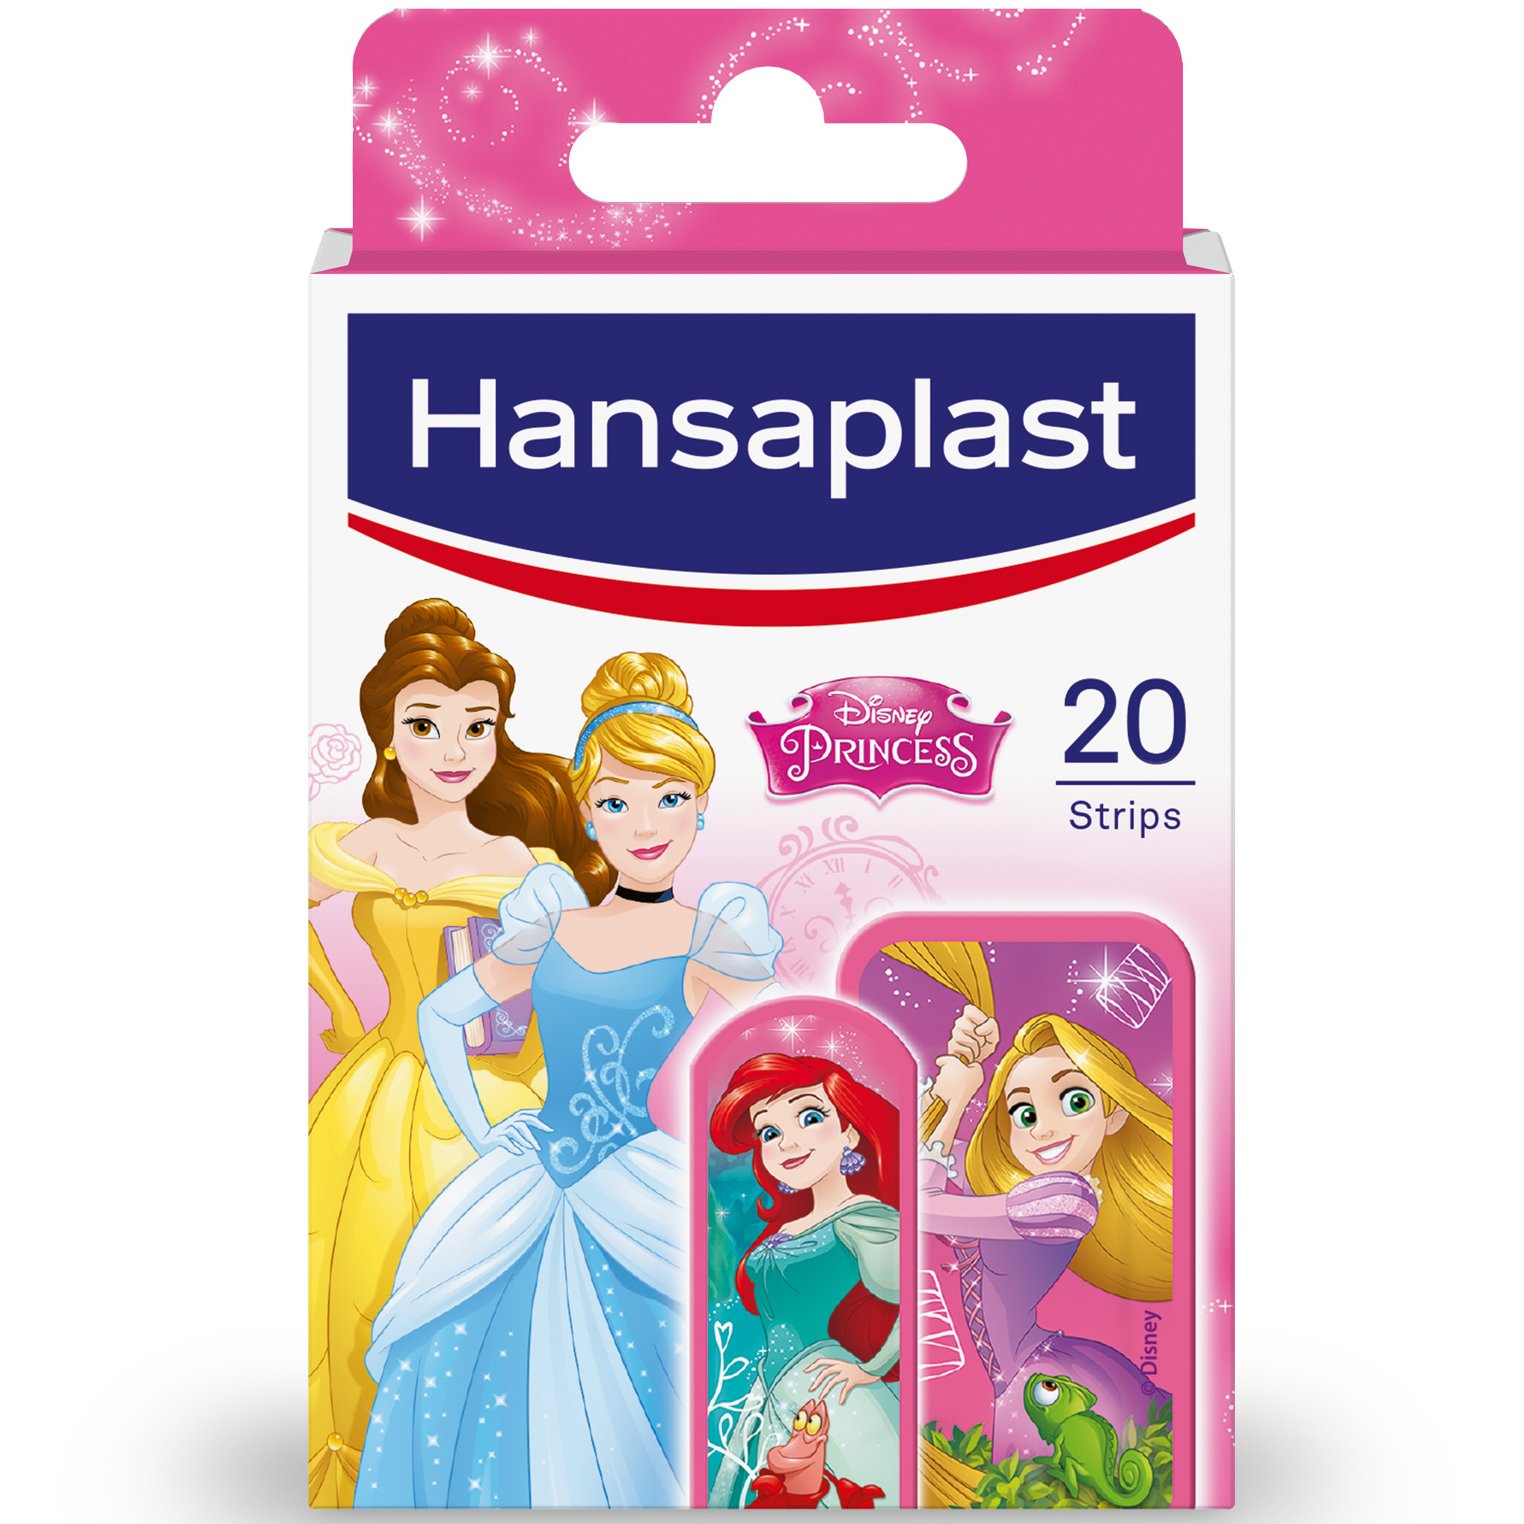 Hansaplast Hansaplast Princess Αυτοκόλλητα Επιθέματα 20 strips